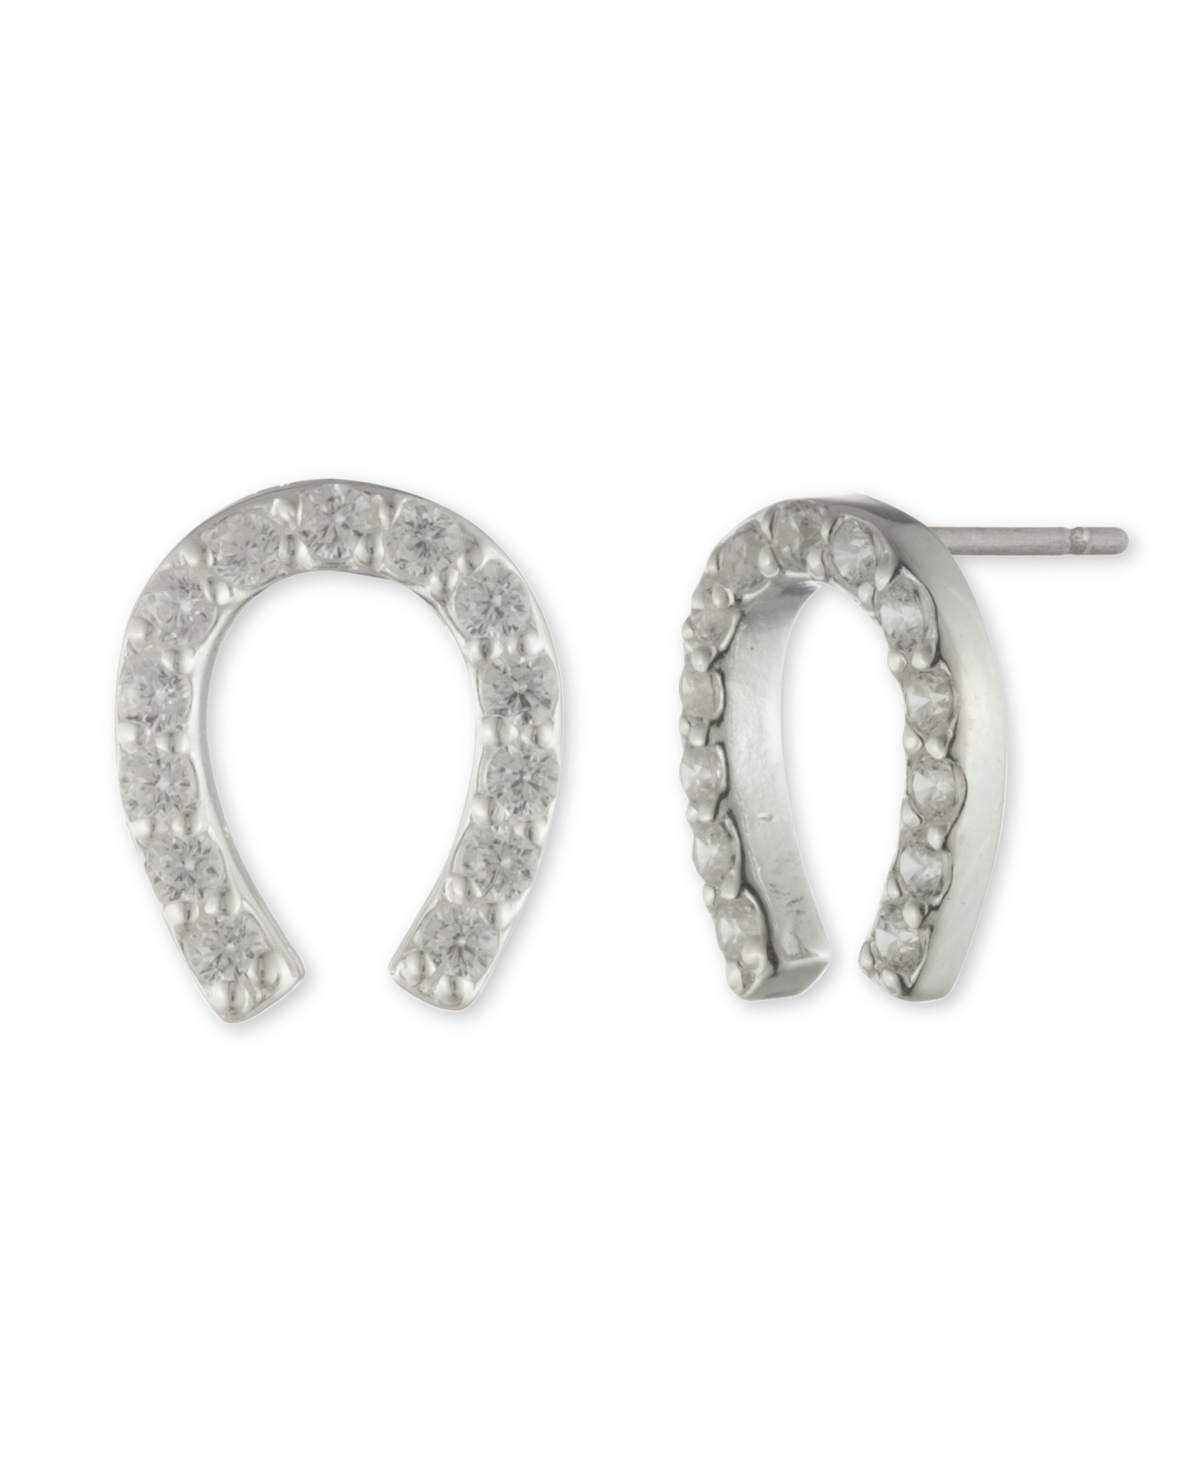 Lauren Ralph Lauren Cubic Zirconia Horseshoe Stud Earrings in Sterling Silver - Silver